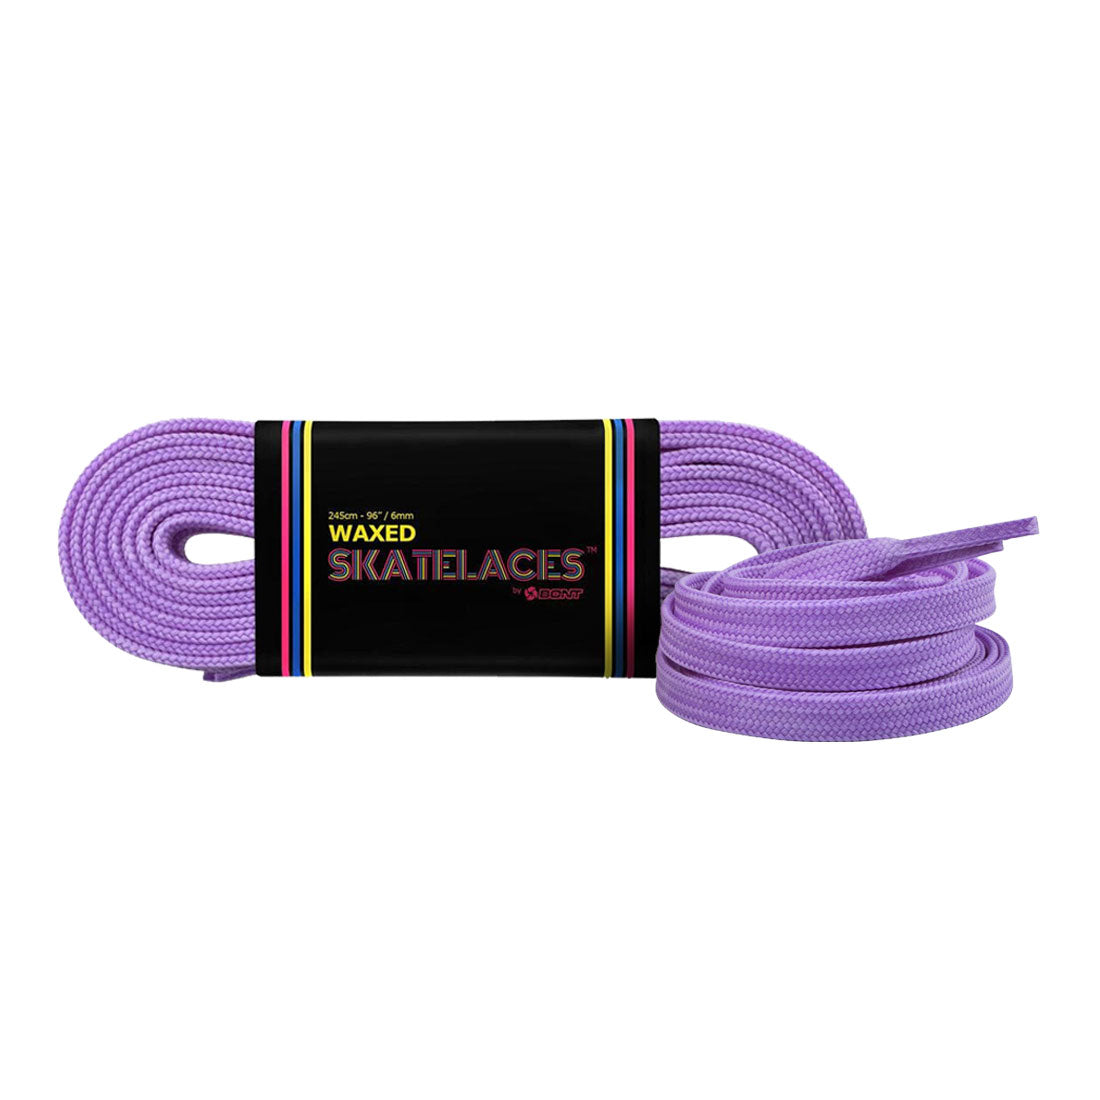 Bont Waxed 6mm Laces - 275cm/108in Amethyst Purple Laces